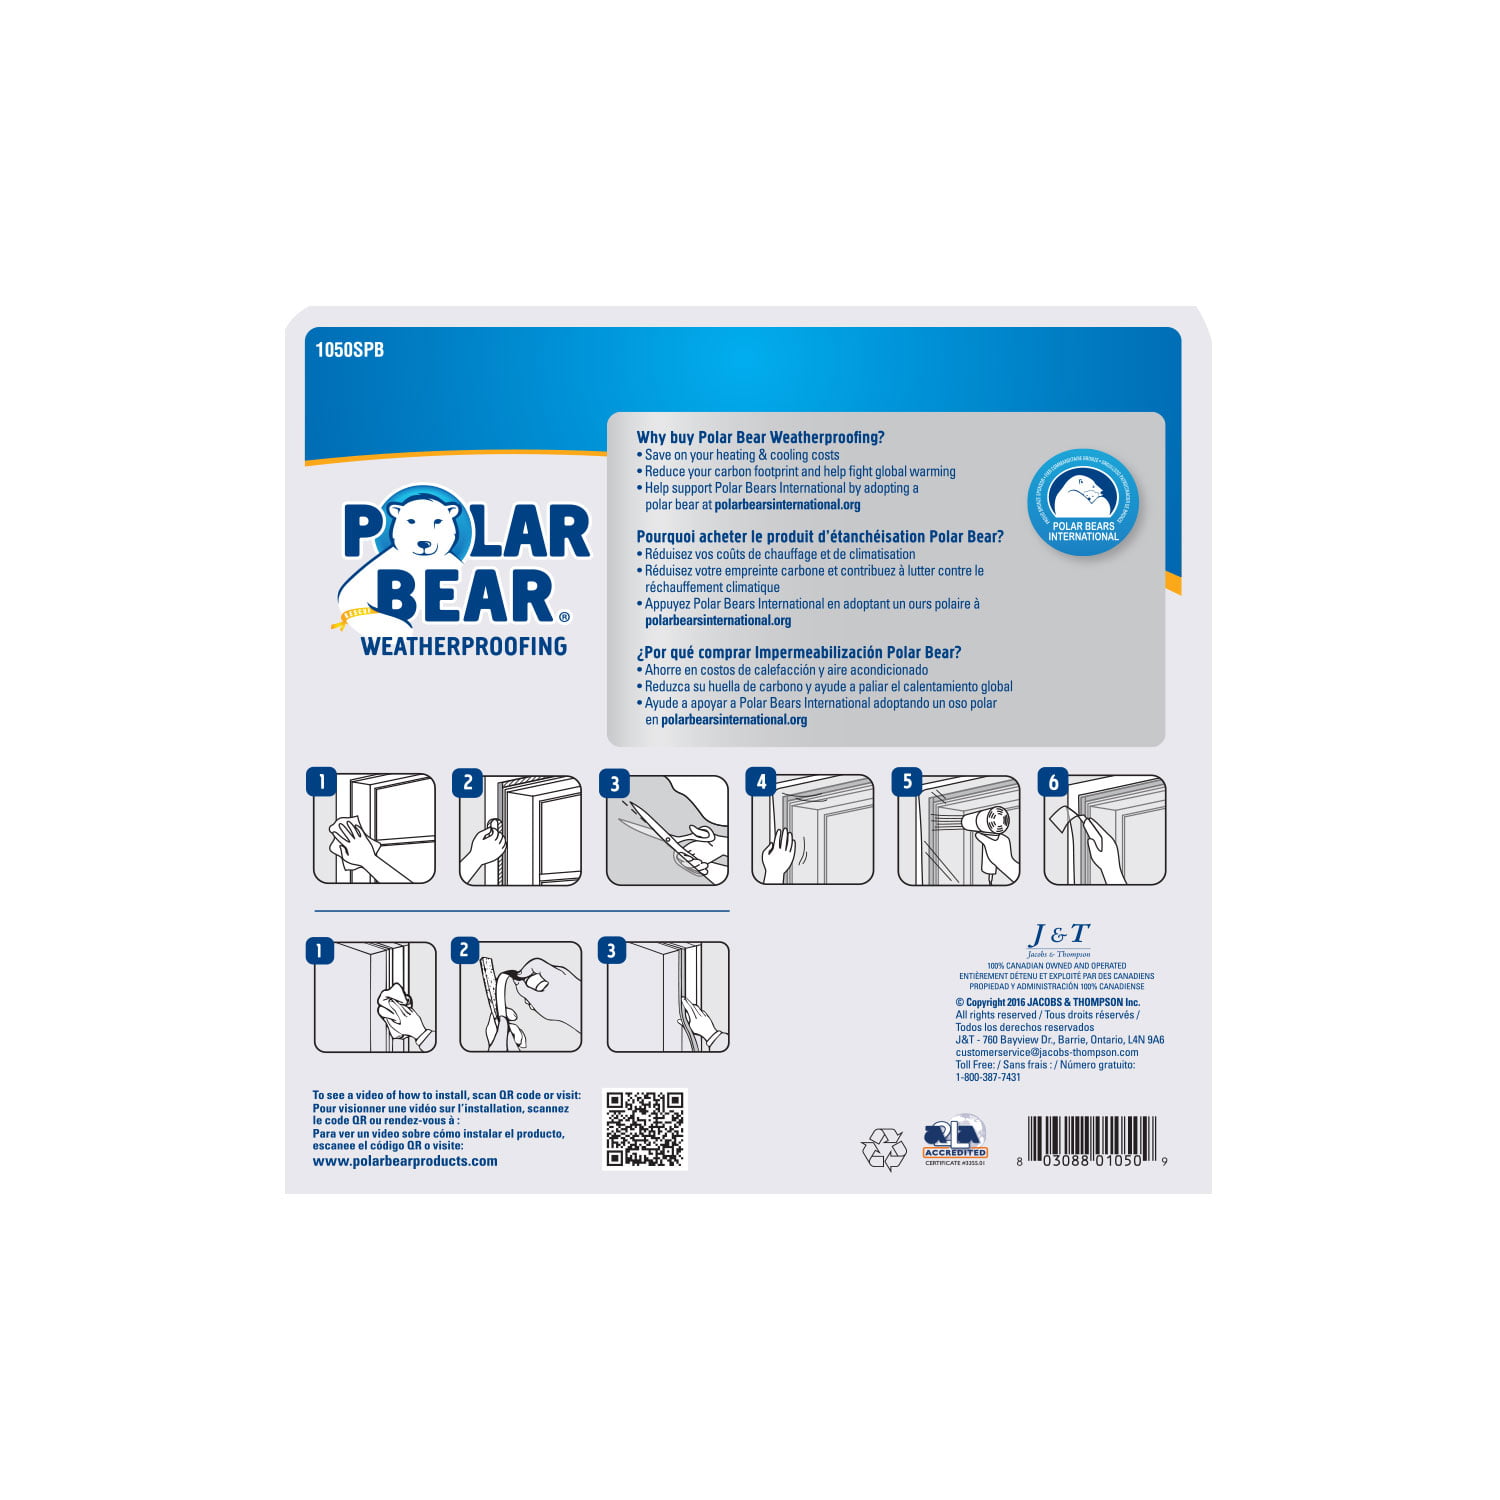 Window Insulation Film Kit Replacement Tape | Polar Bear Weather Stripping-  1060SPB